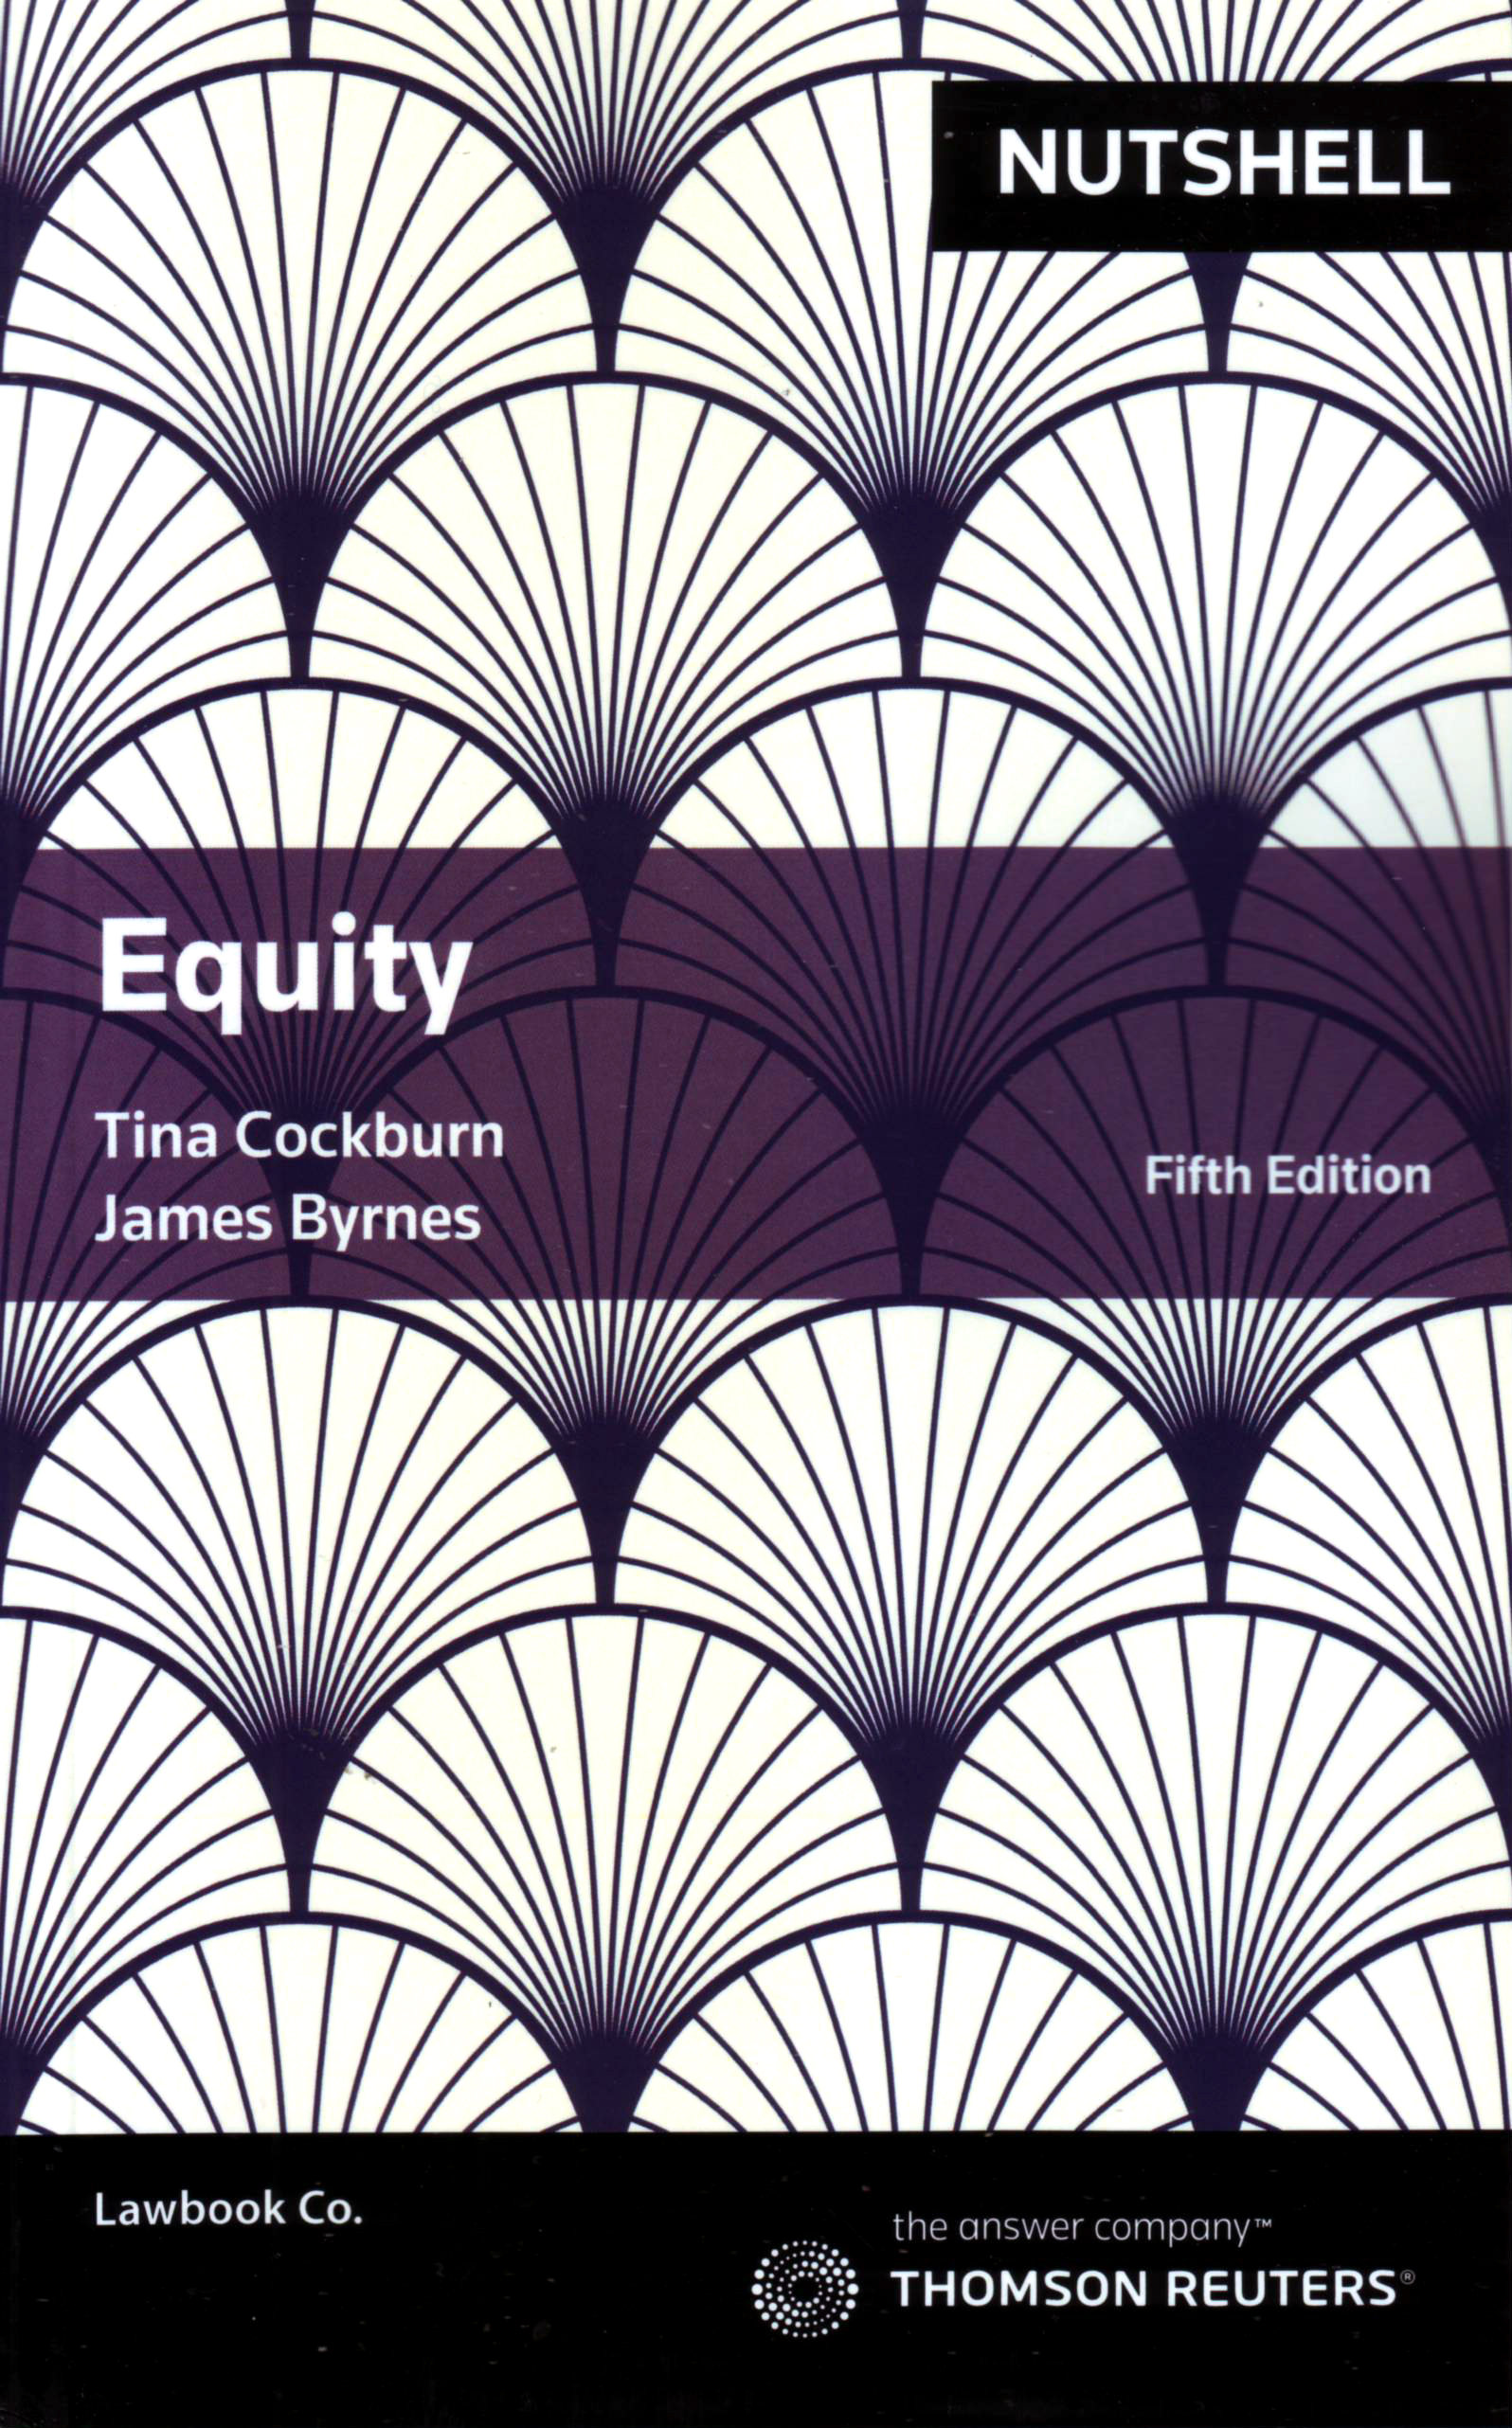 Equity e5 (Nutshell Series)